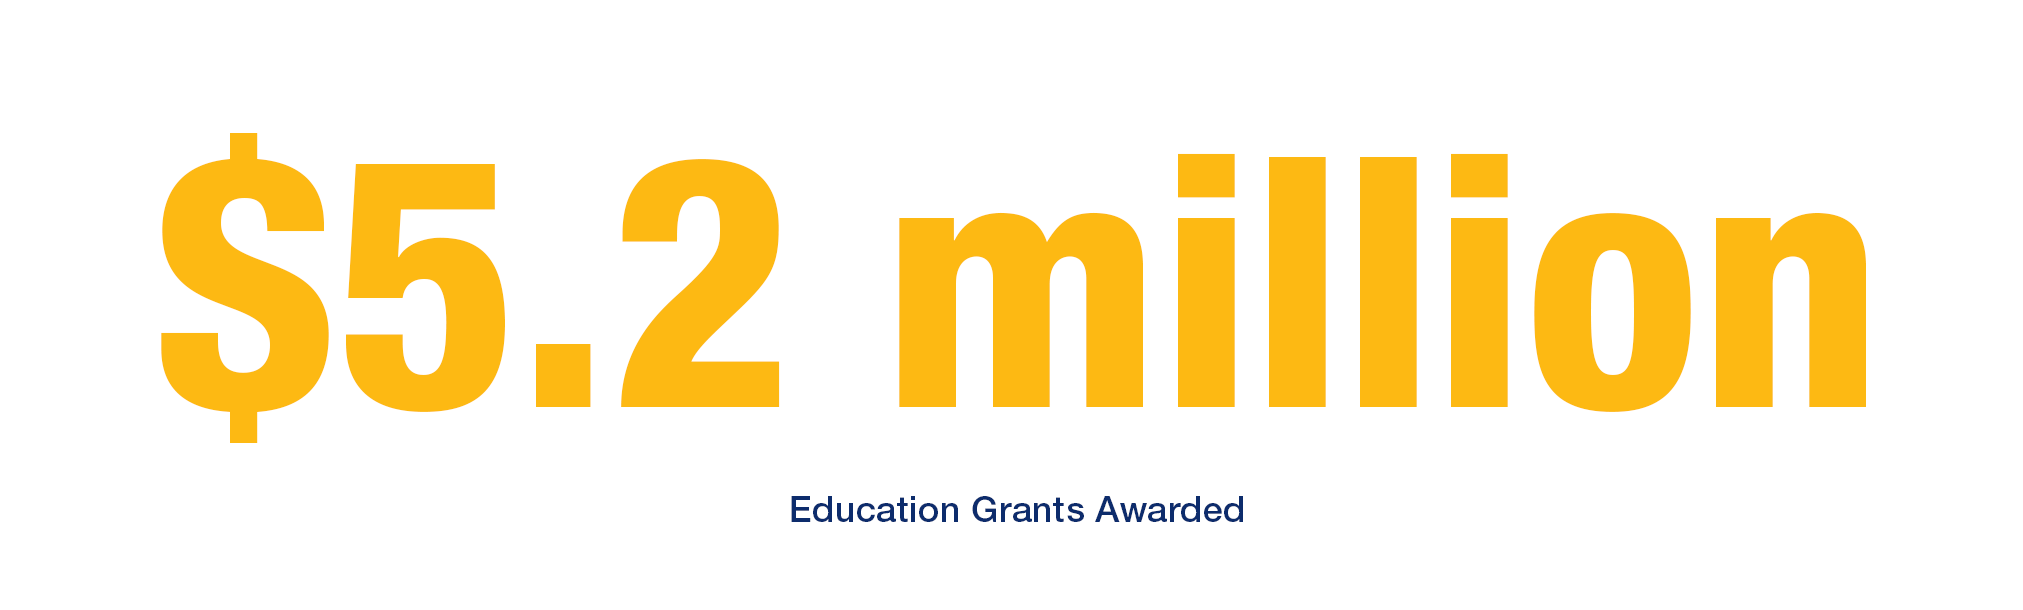 $5.2 million Education Grants Awarded